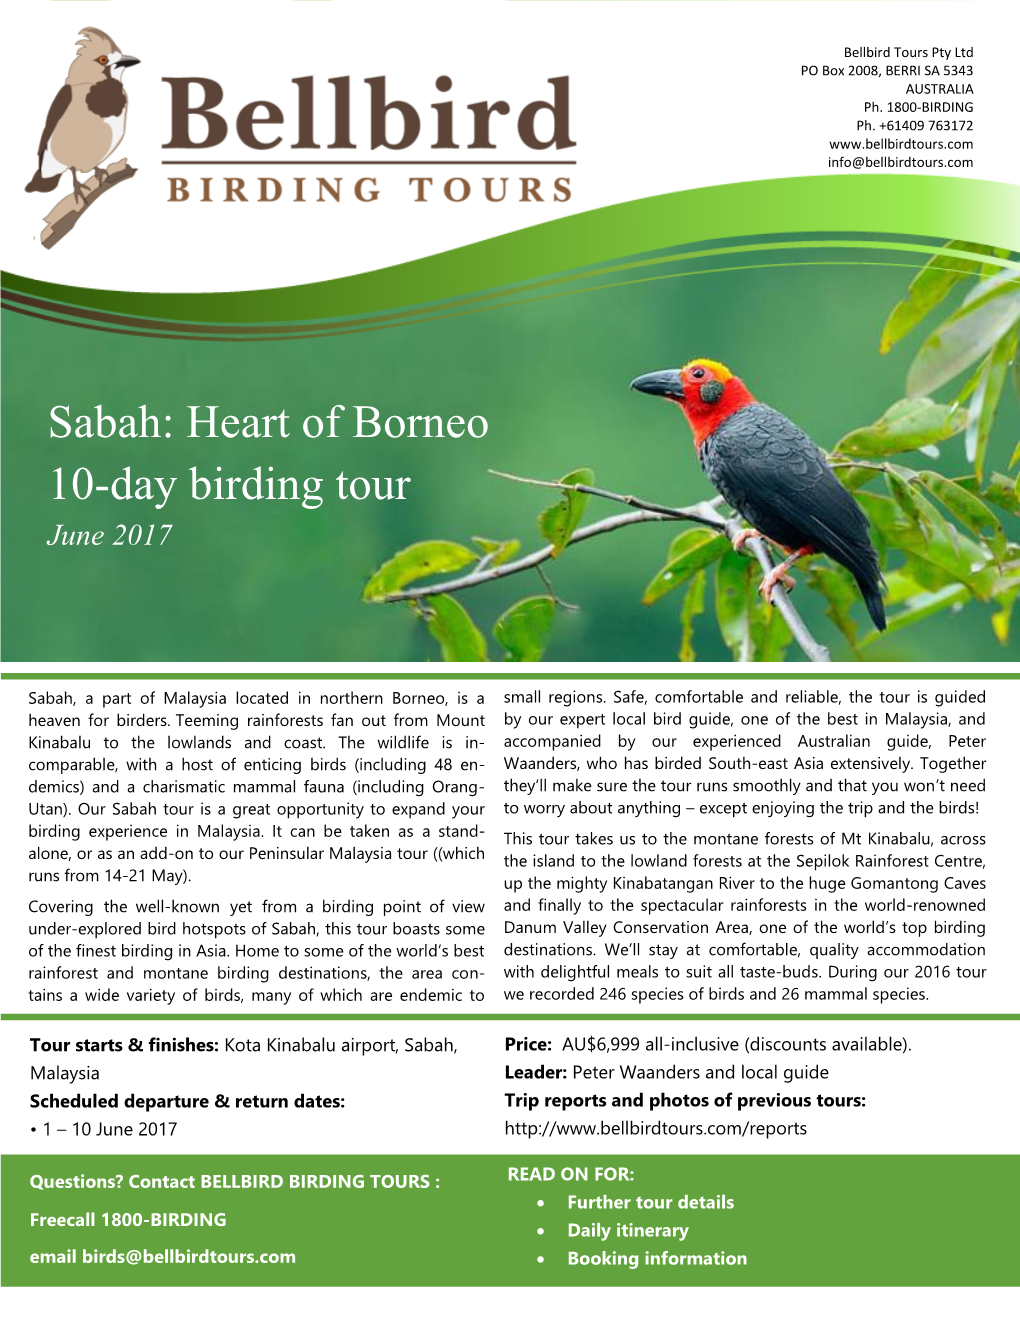 Sabah: Heart of Borneo